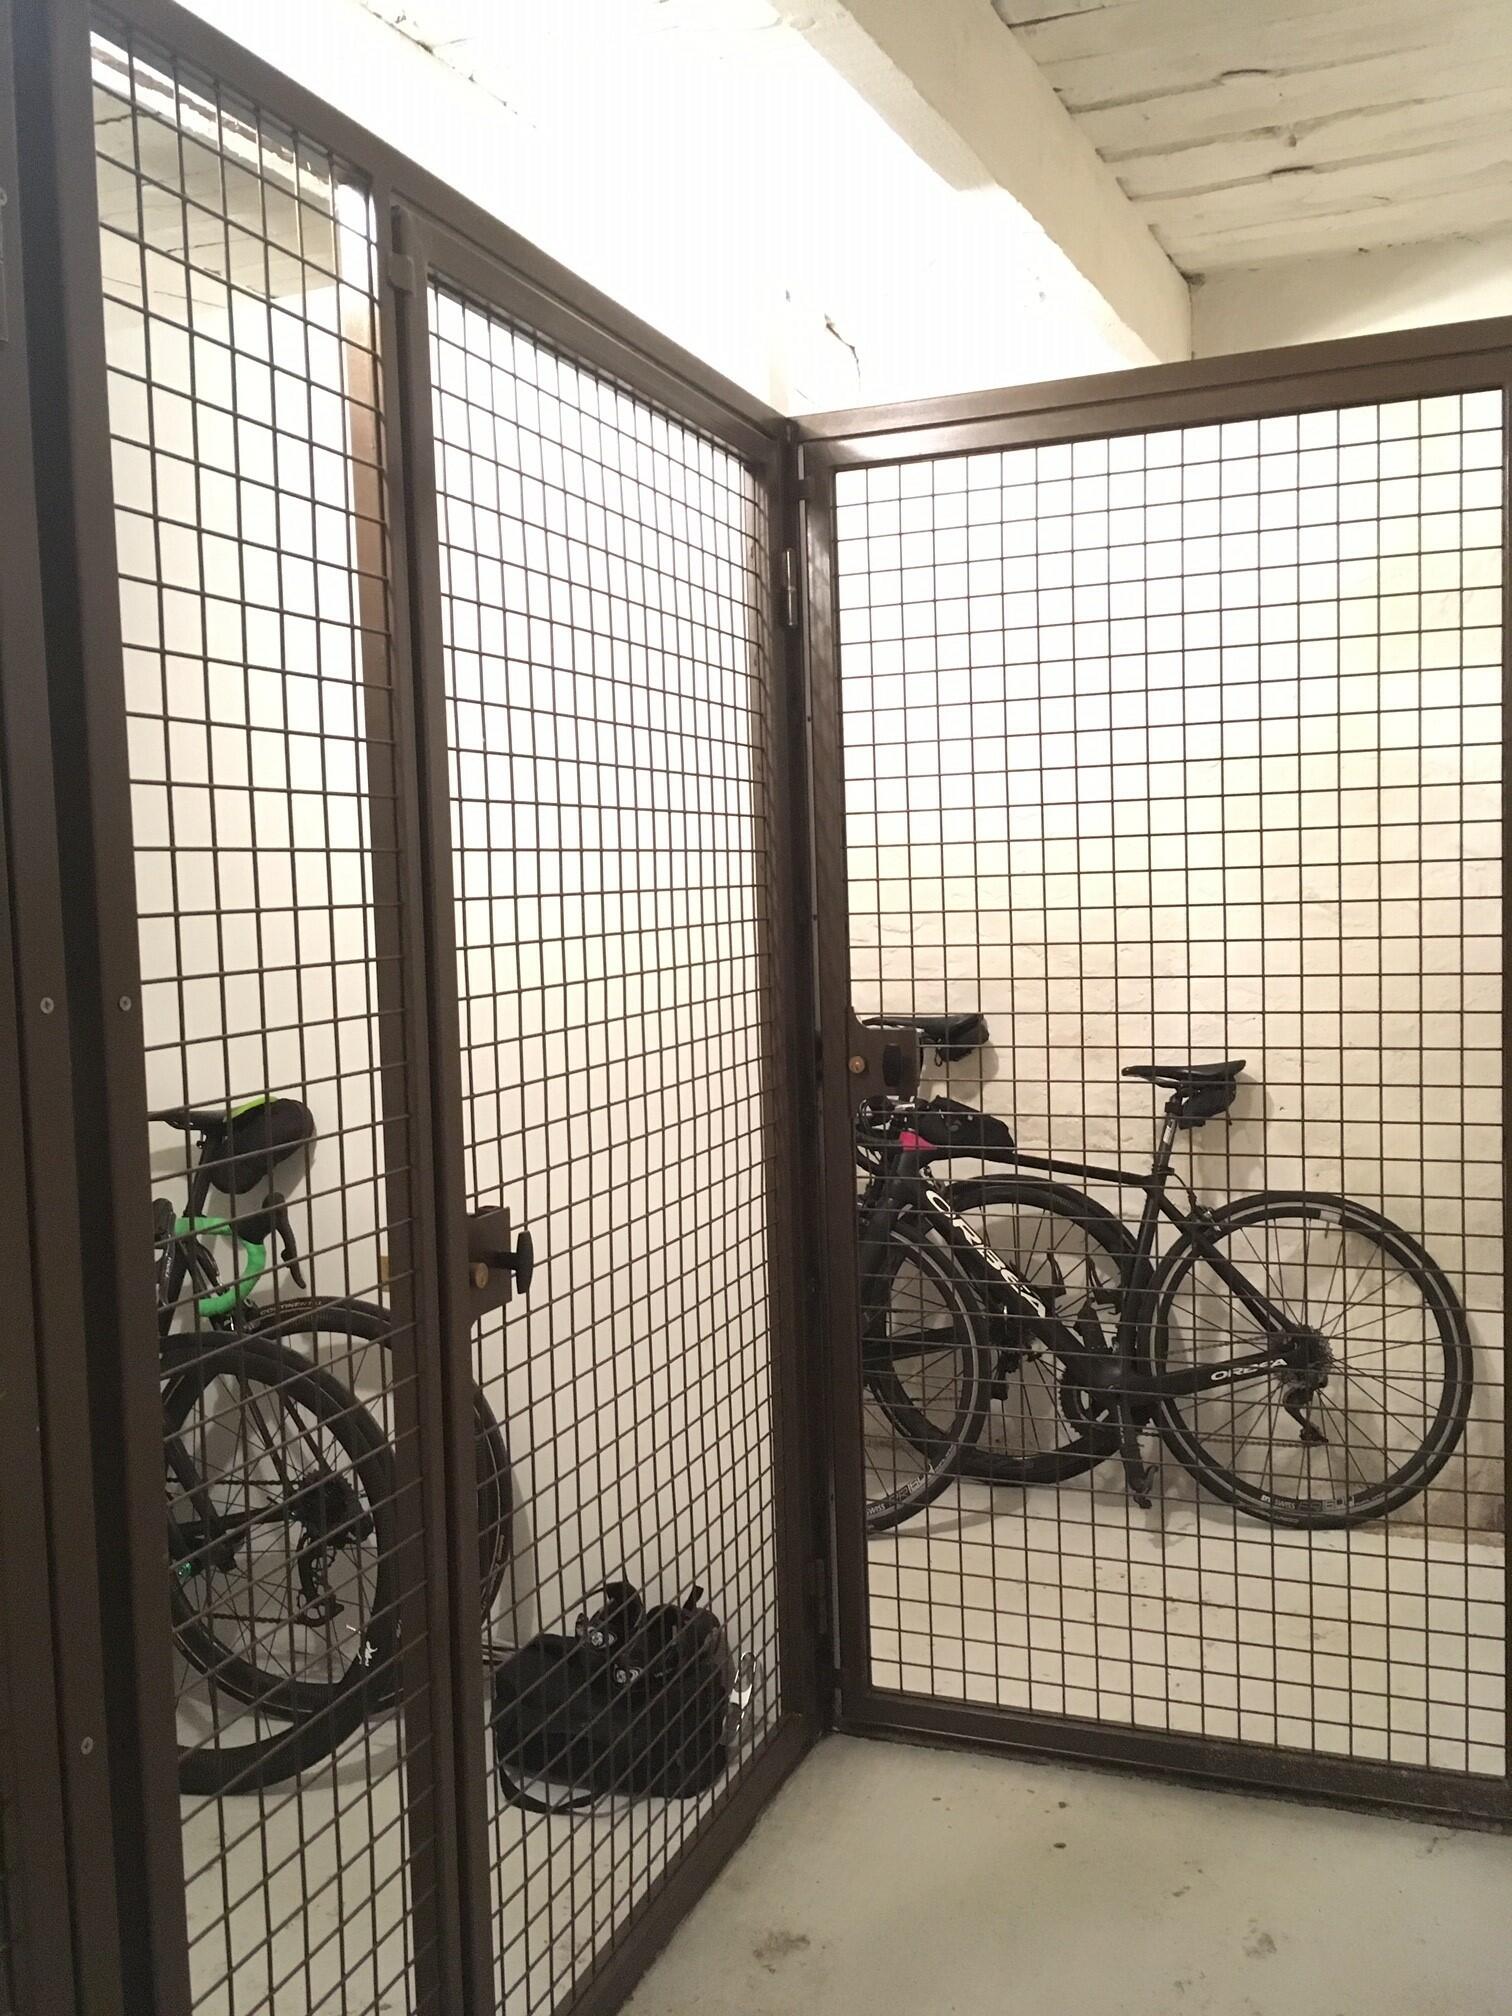 Private and secured bike storage